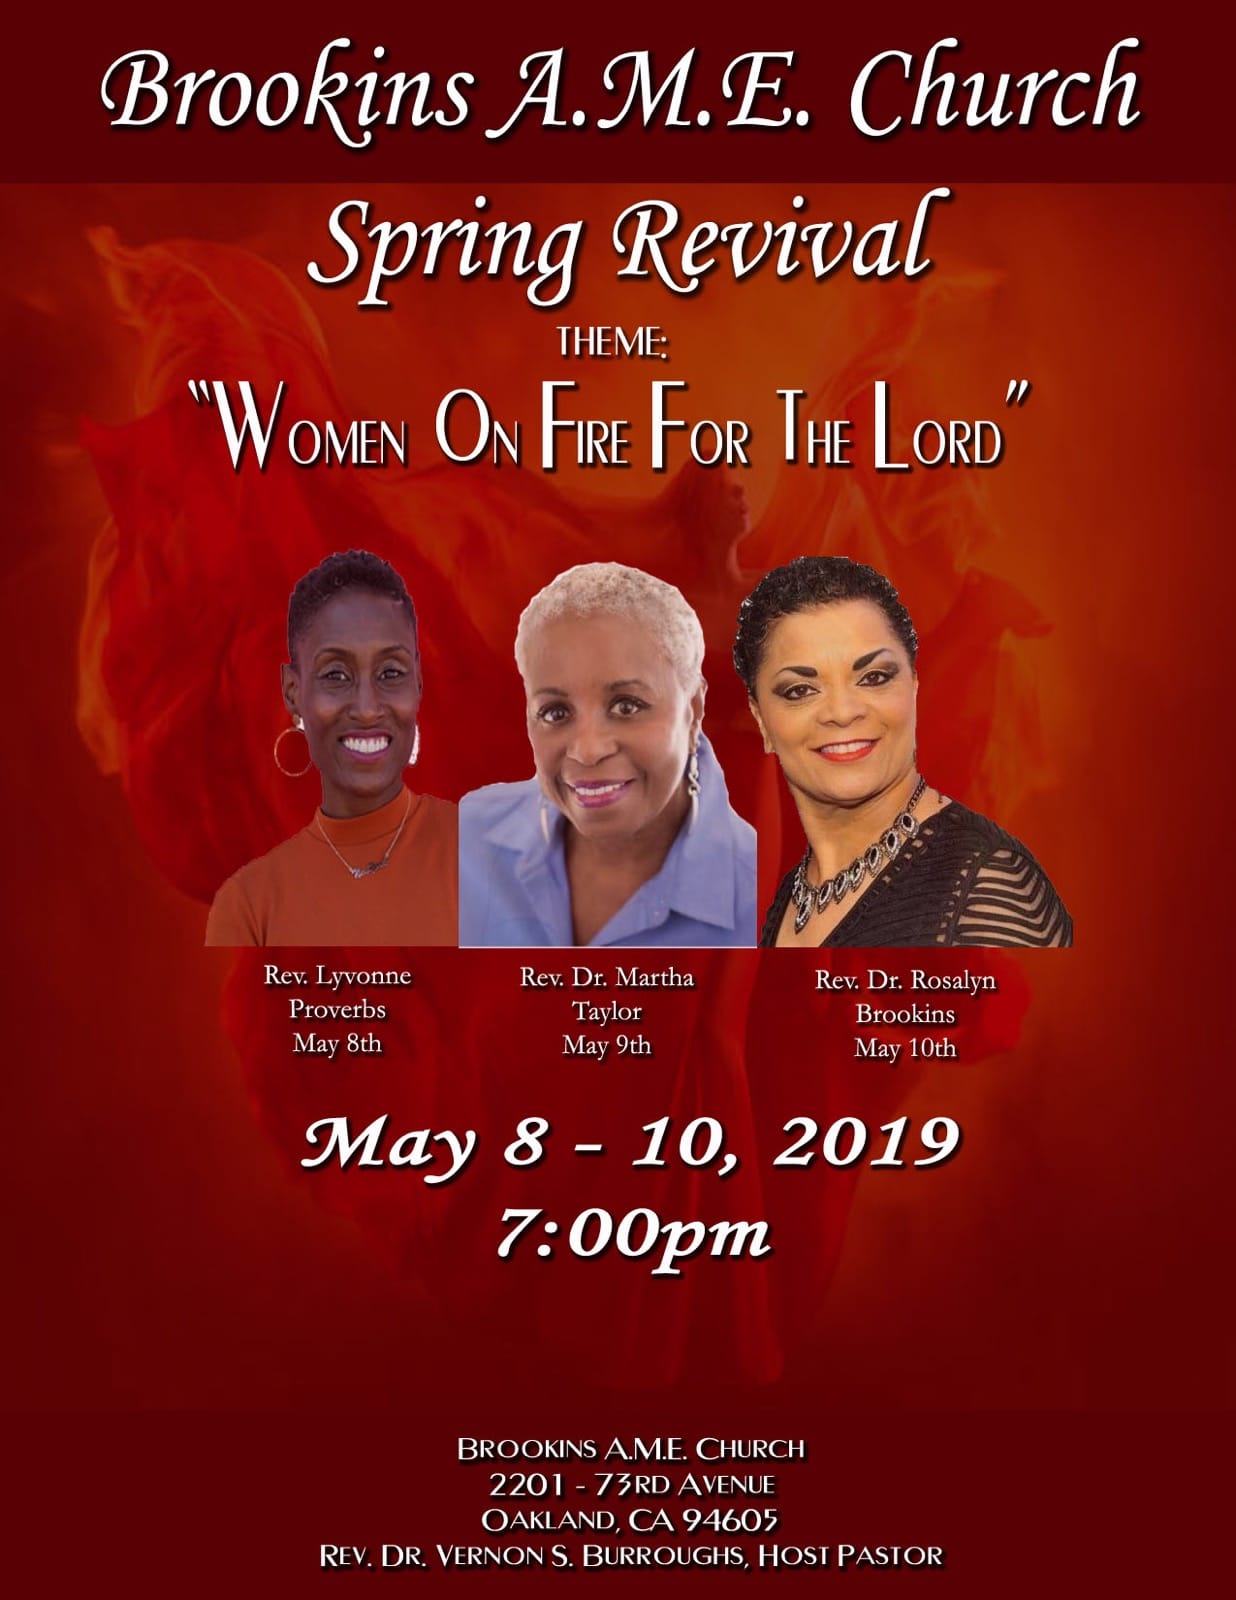 Brookins AME Church Spring Revival 2019